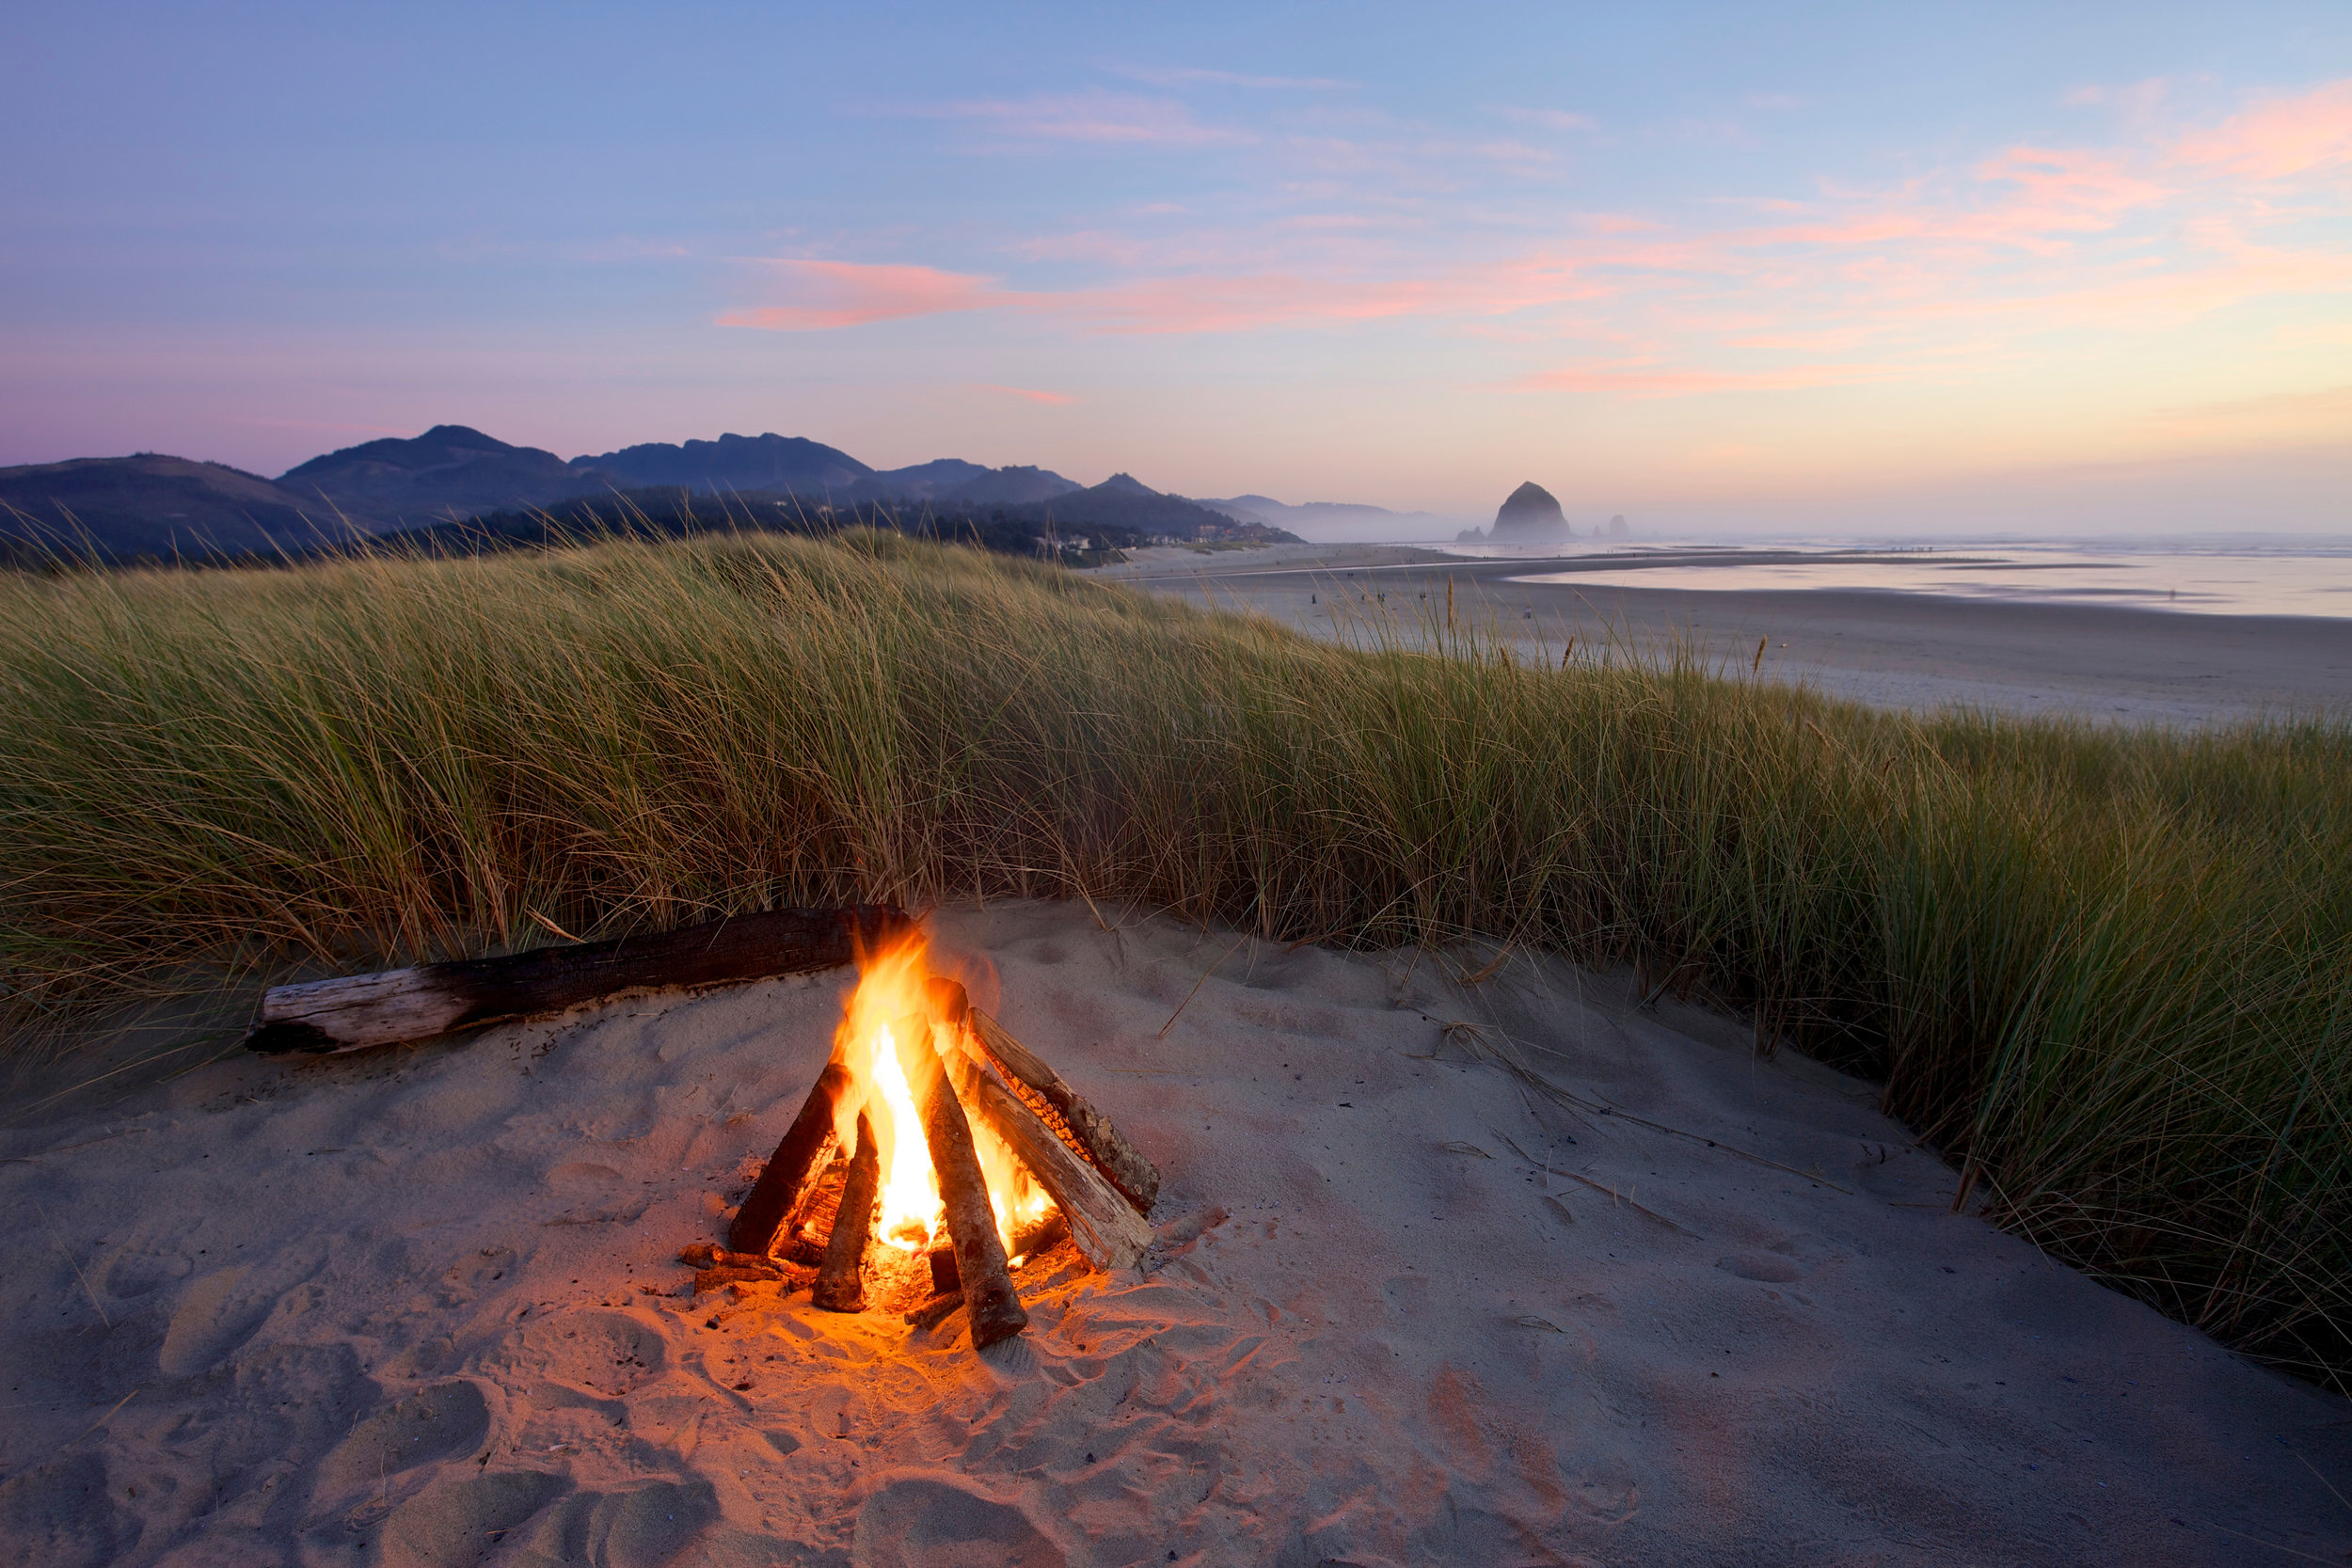 Beach Bonfire